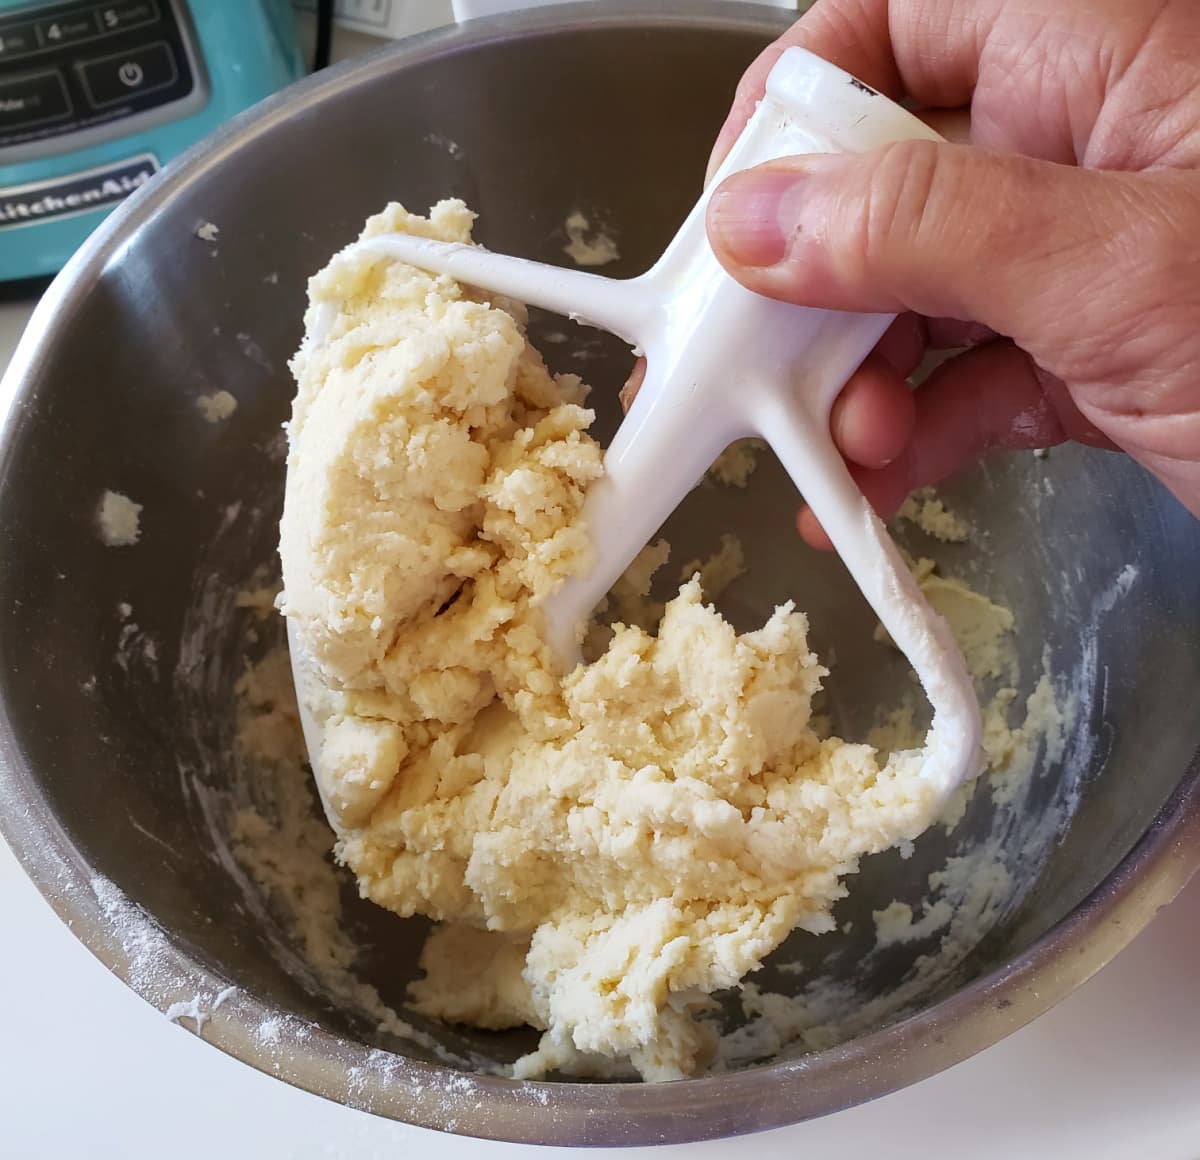 Lemon Shortbread dough is thick on the mixer paddle